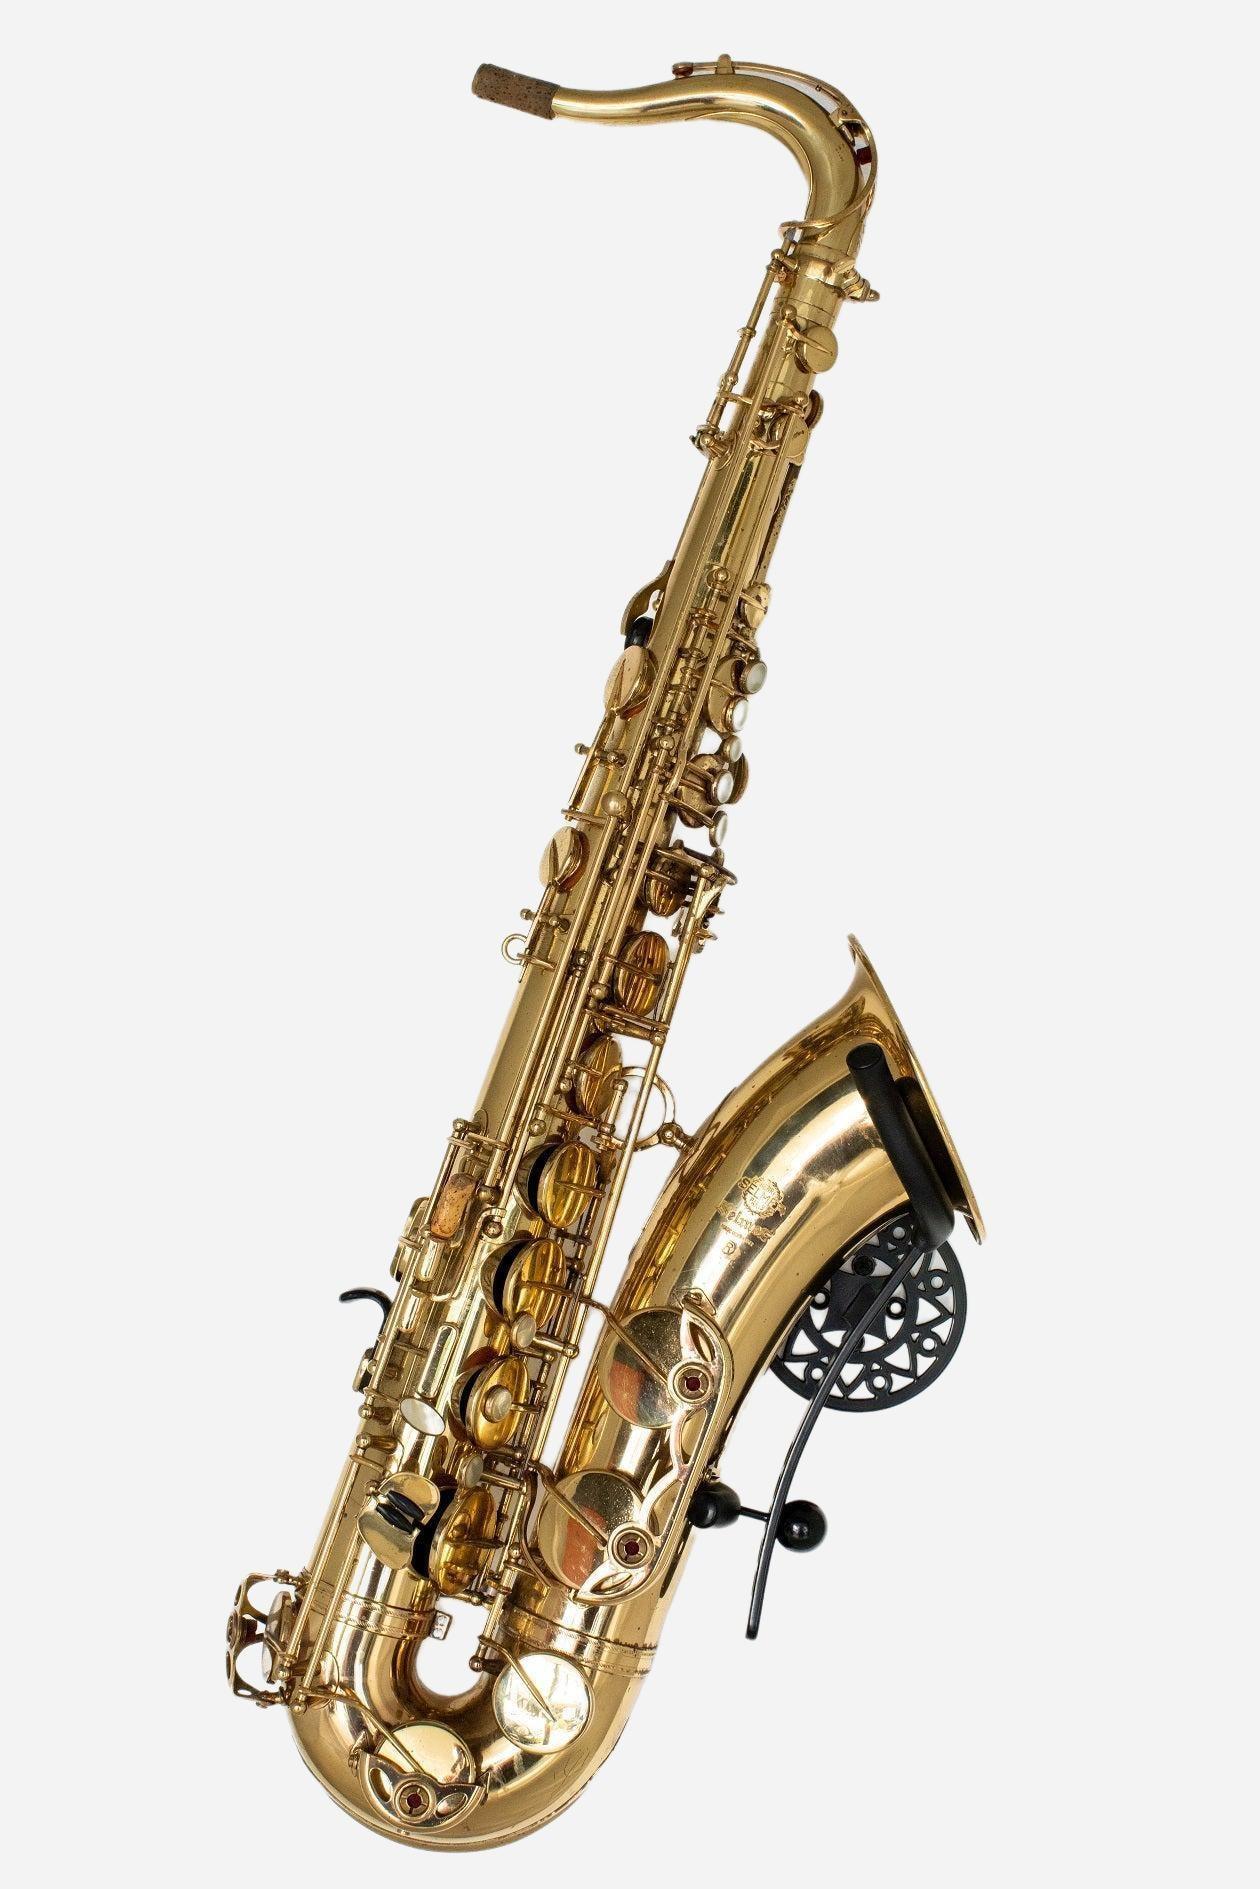 Selmer Mark 7 tenor saxophone in Aztec wallmount by Locoparasaxo.com